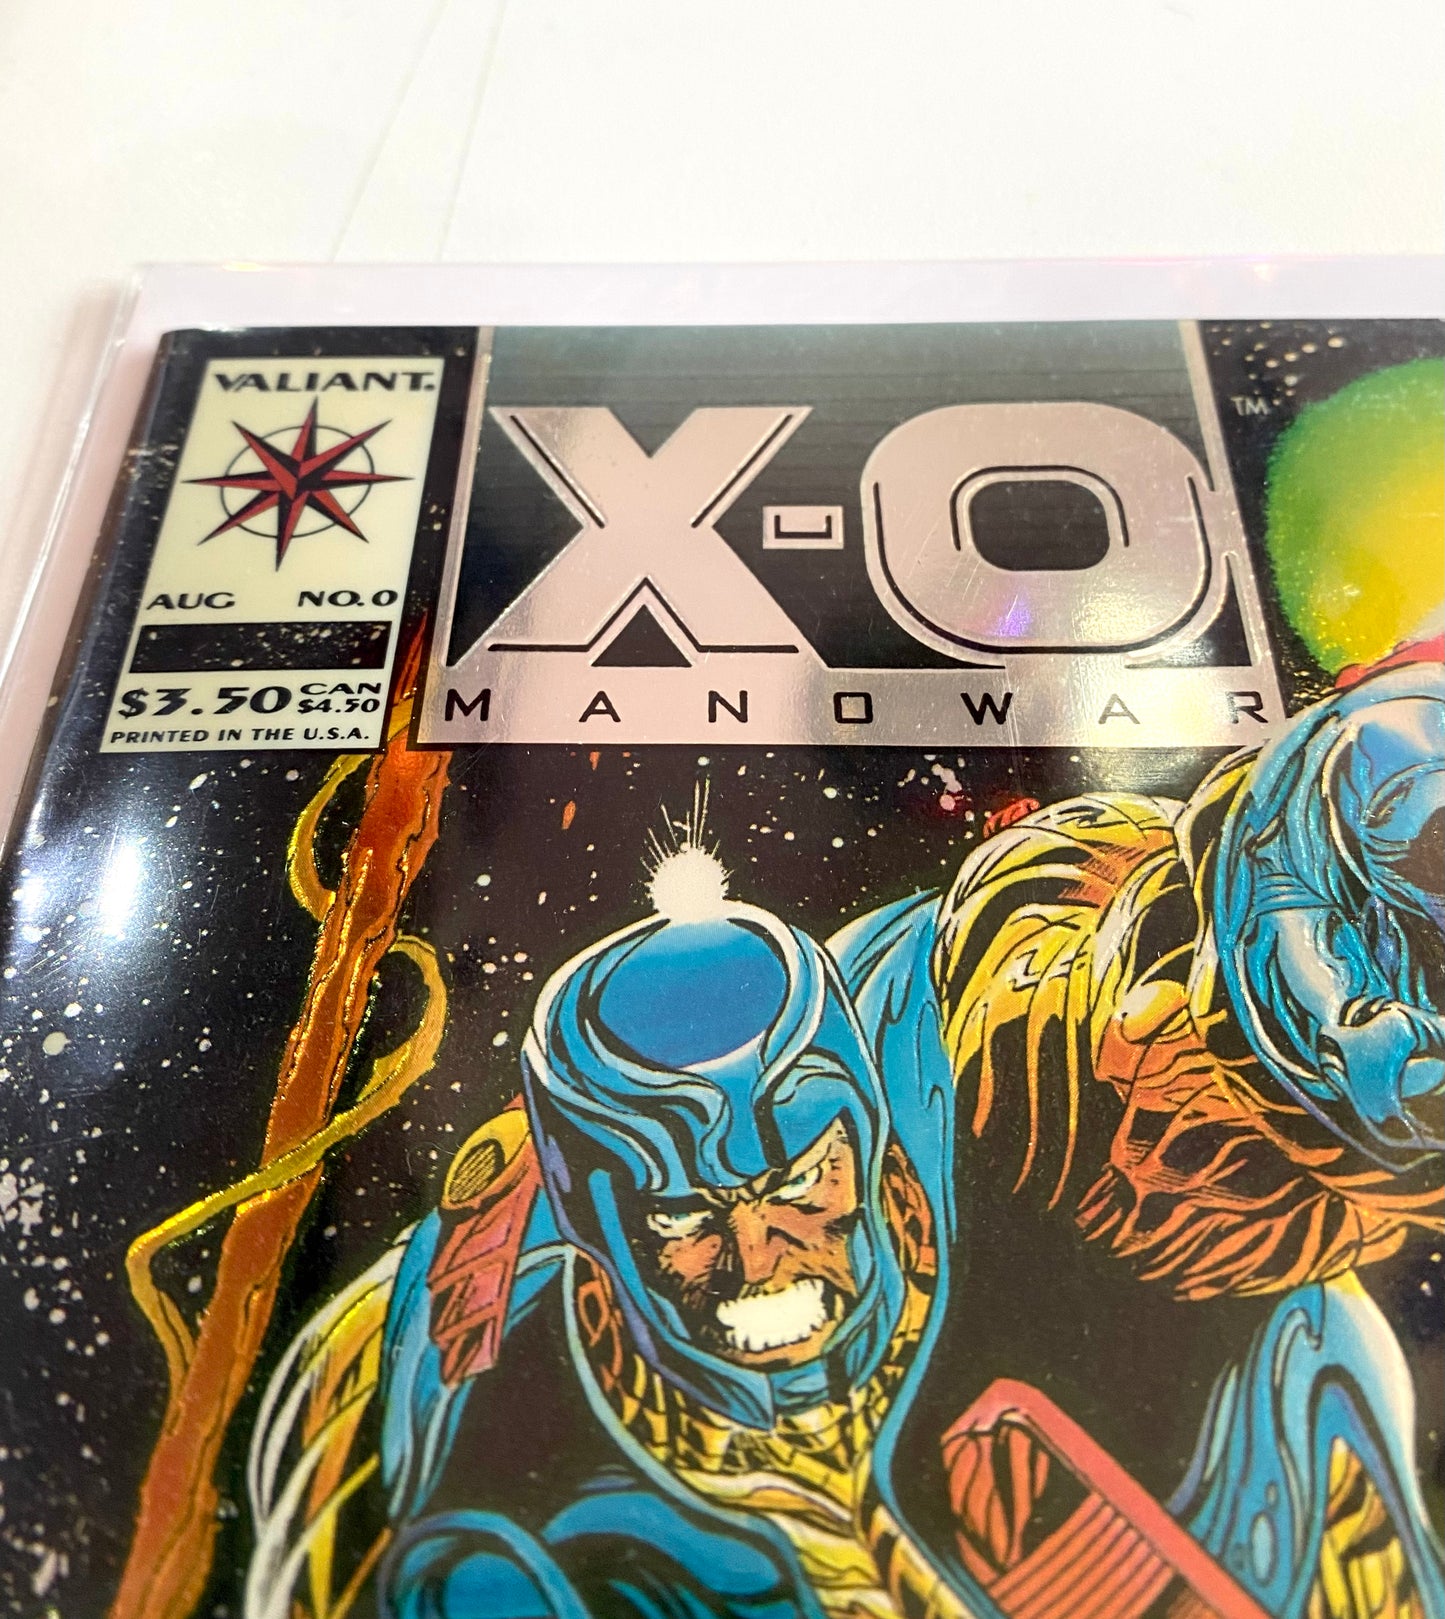 Valiant: X-O Manowar Aug No.0